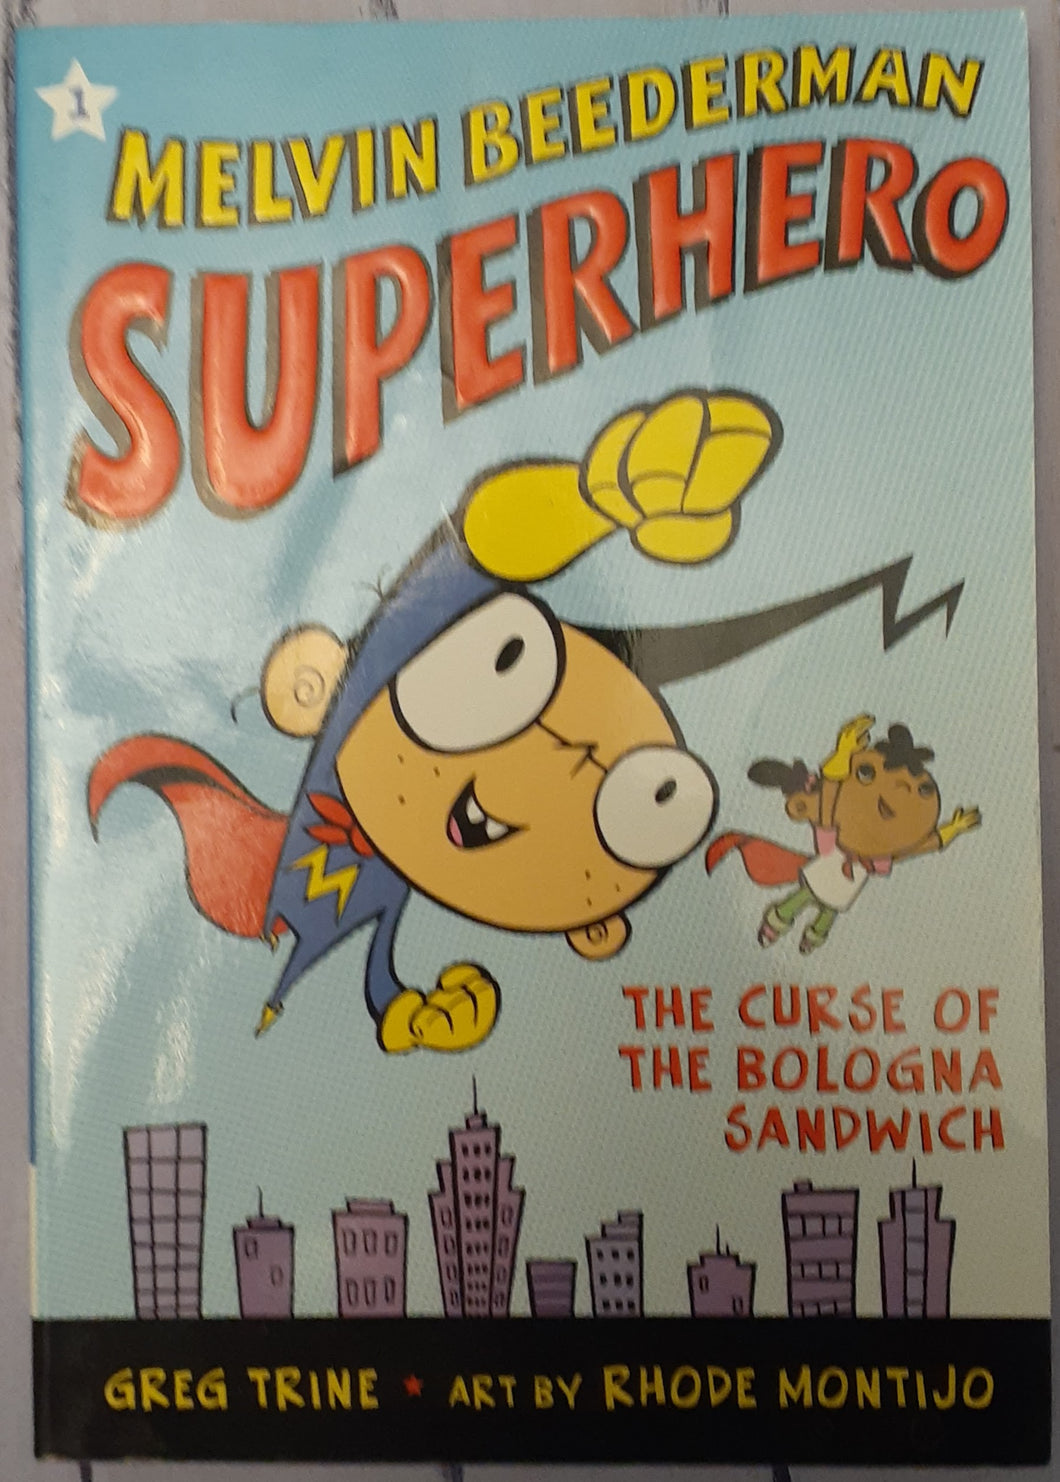 Melvin Beederman Superhero - The Curse of the Balogna Sandwich